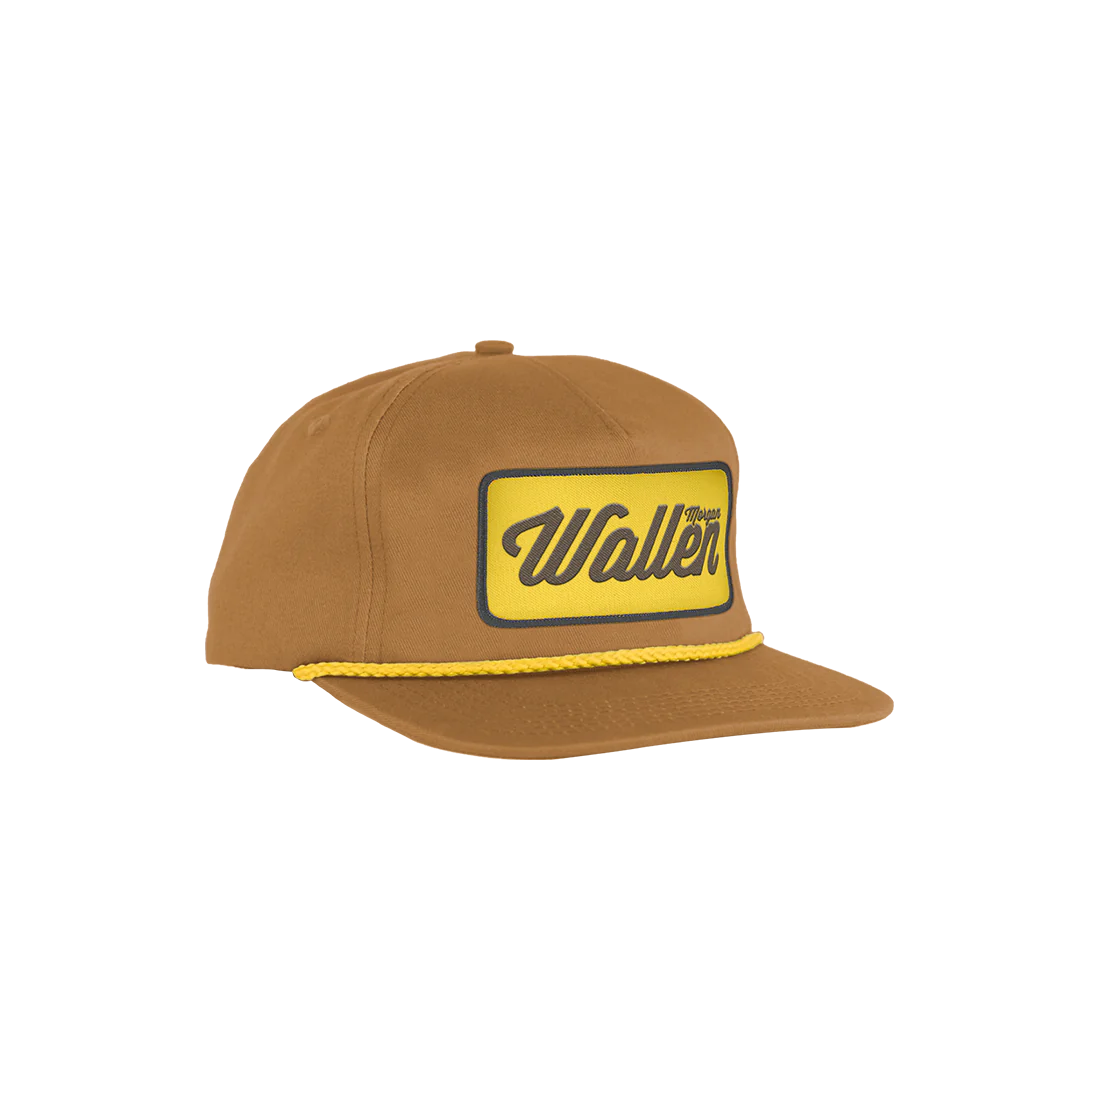 Morgan Wallen - Yellow Patch Rope Hat